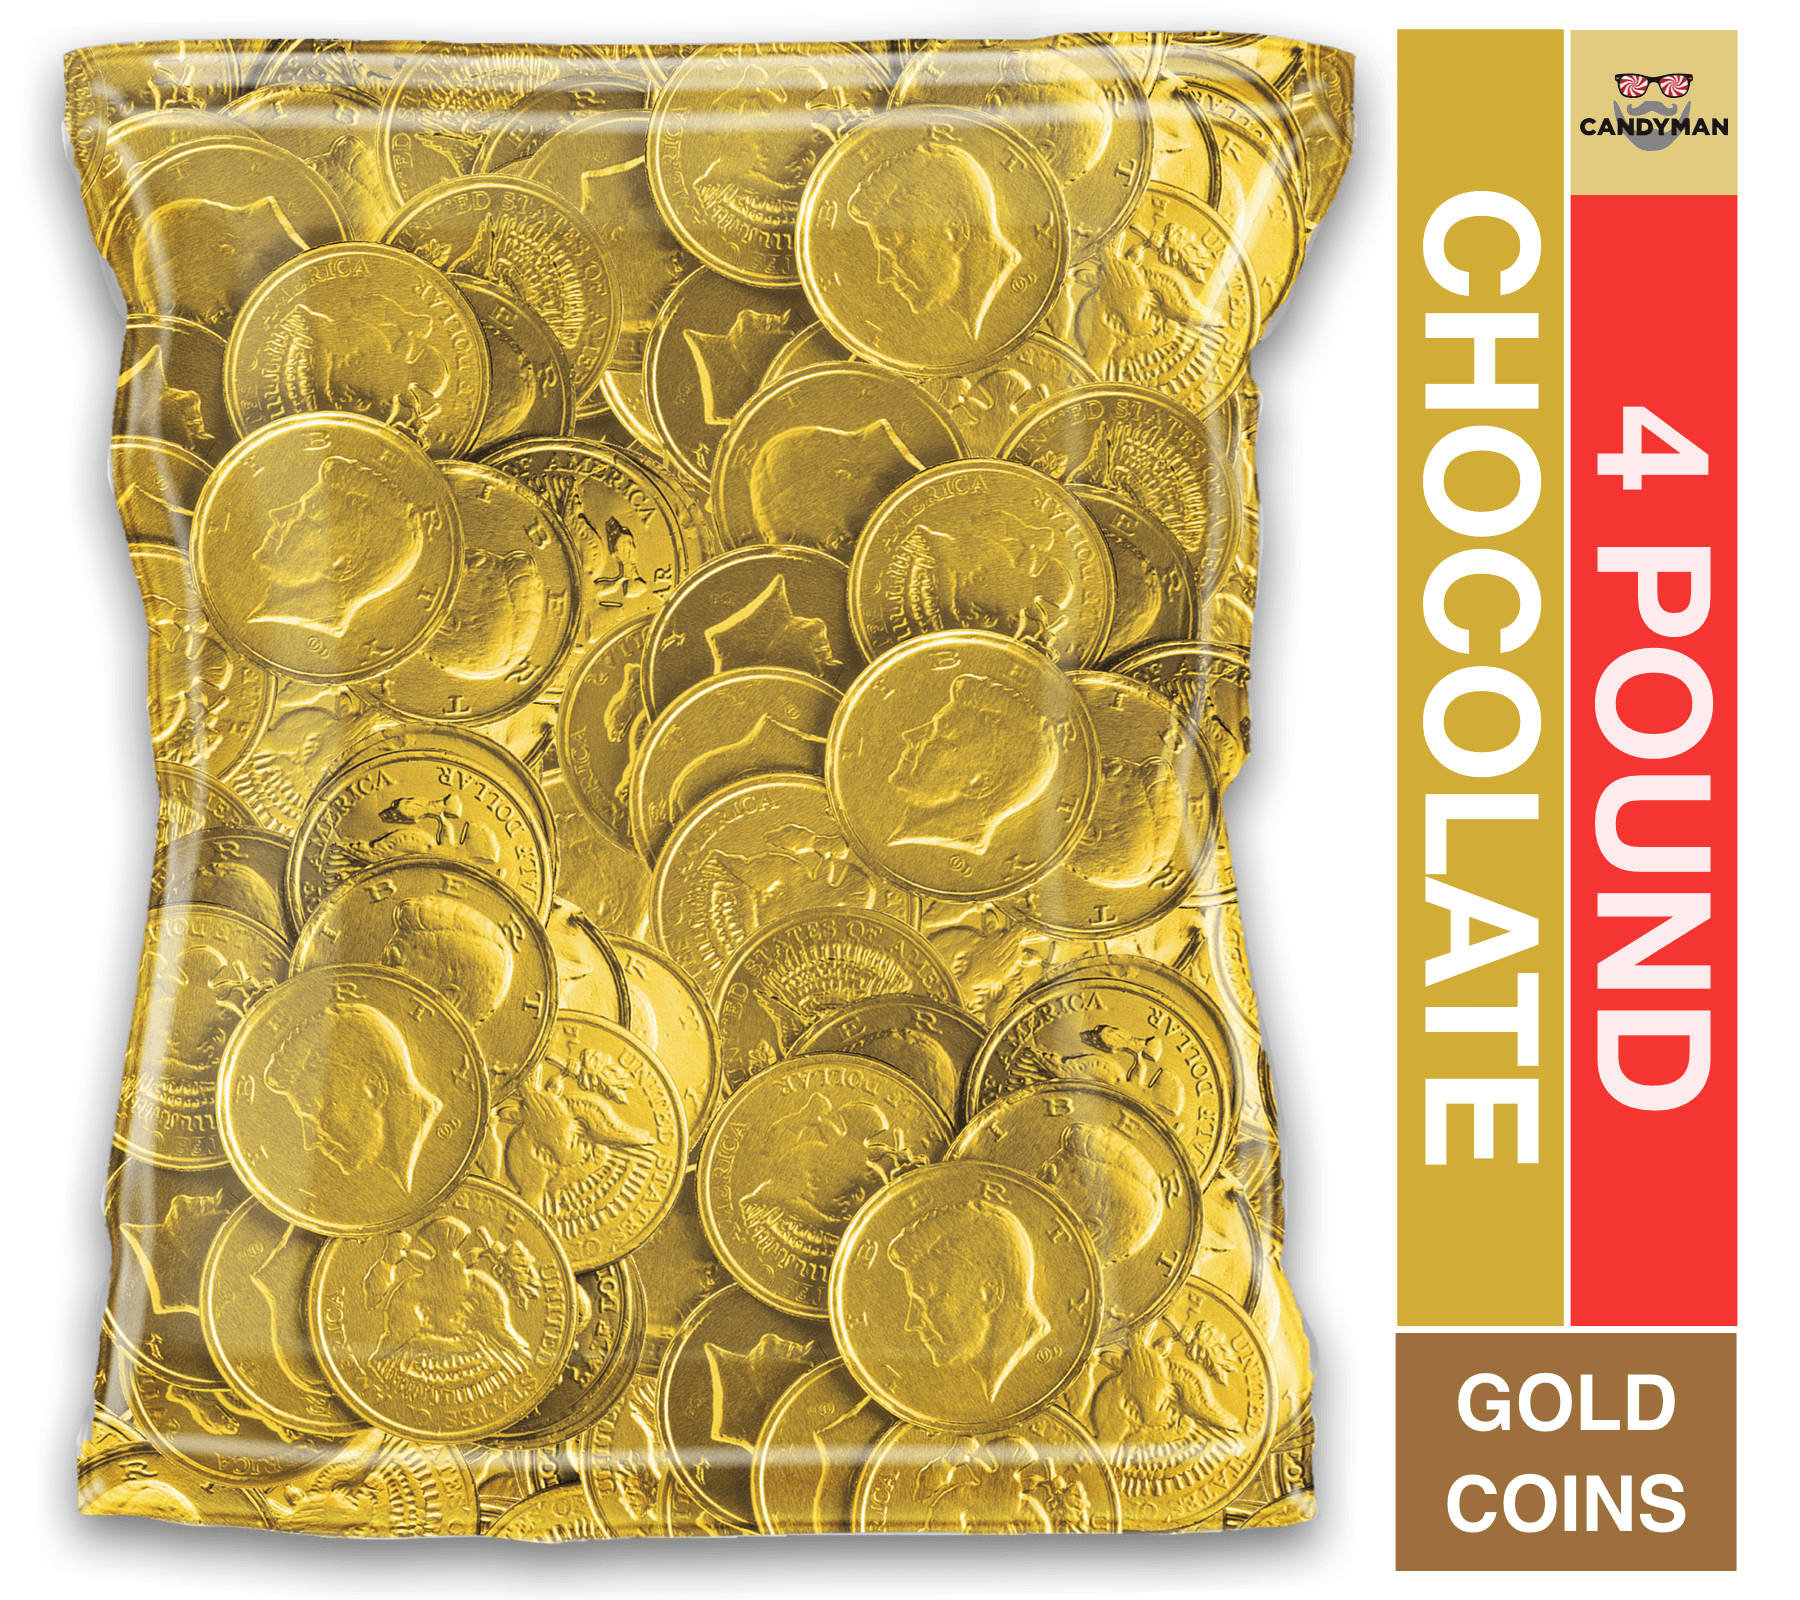 4lb Pack of Bulk Gold Coins Milk Chocolate Candy - Walmart.com ...